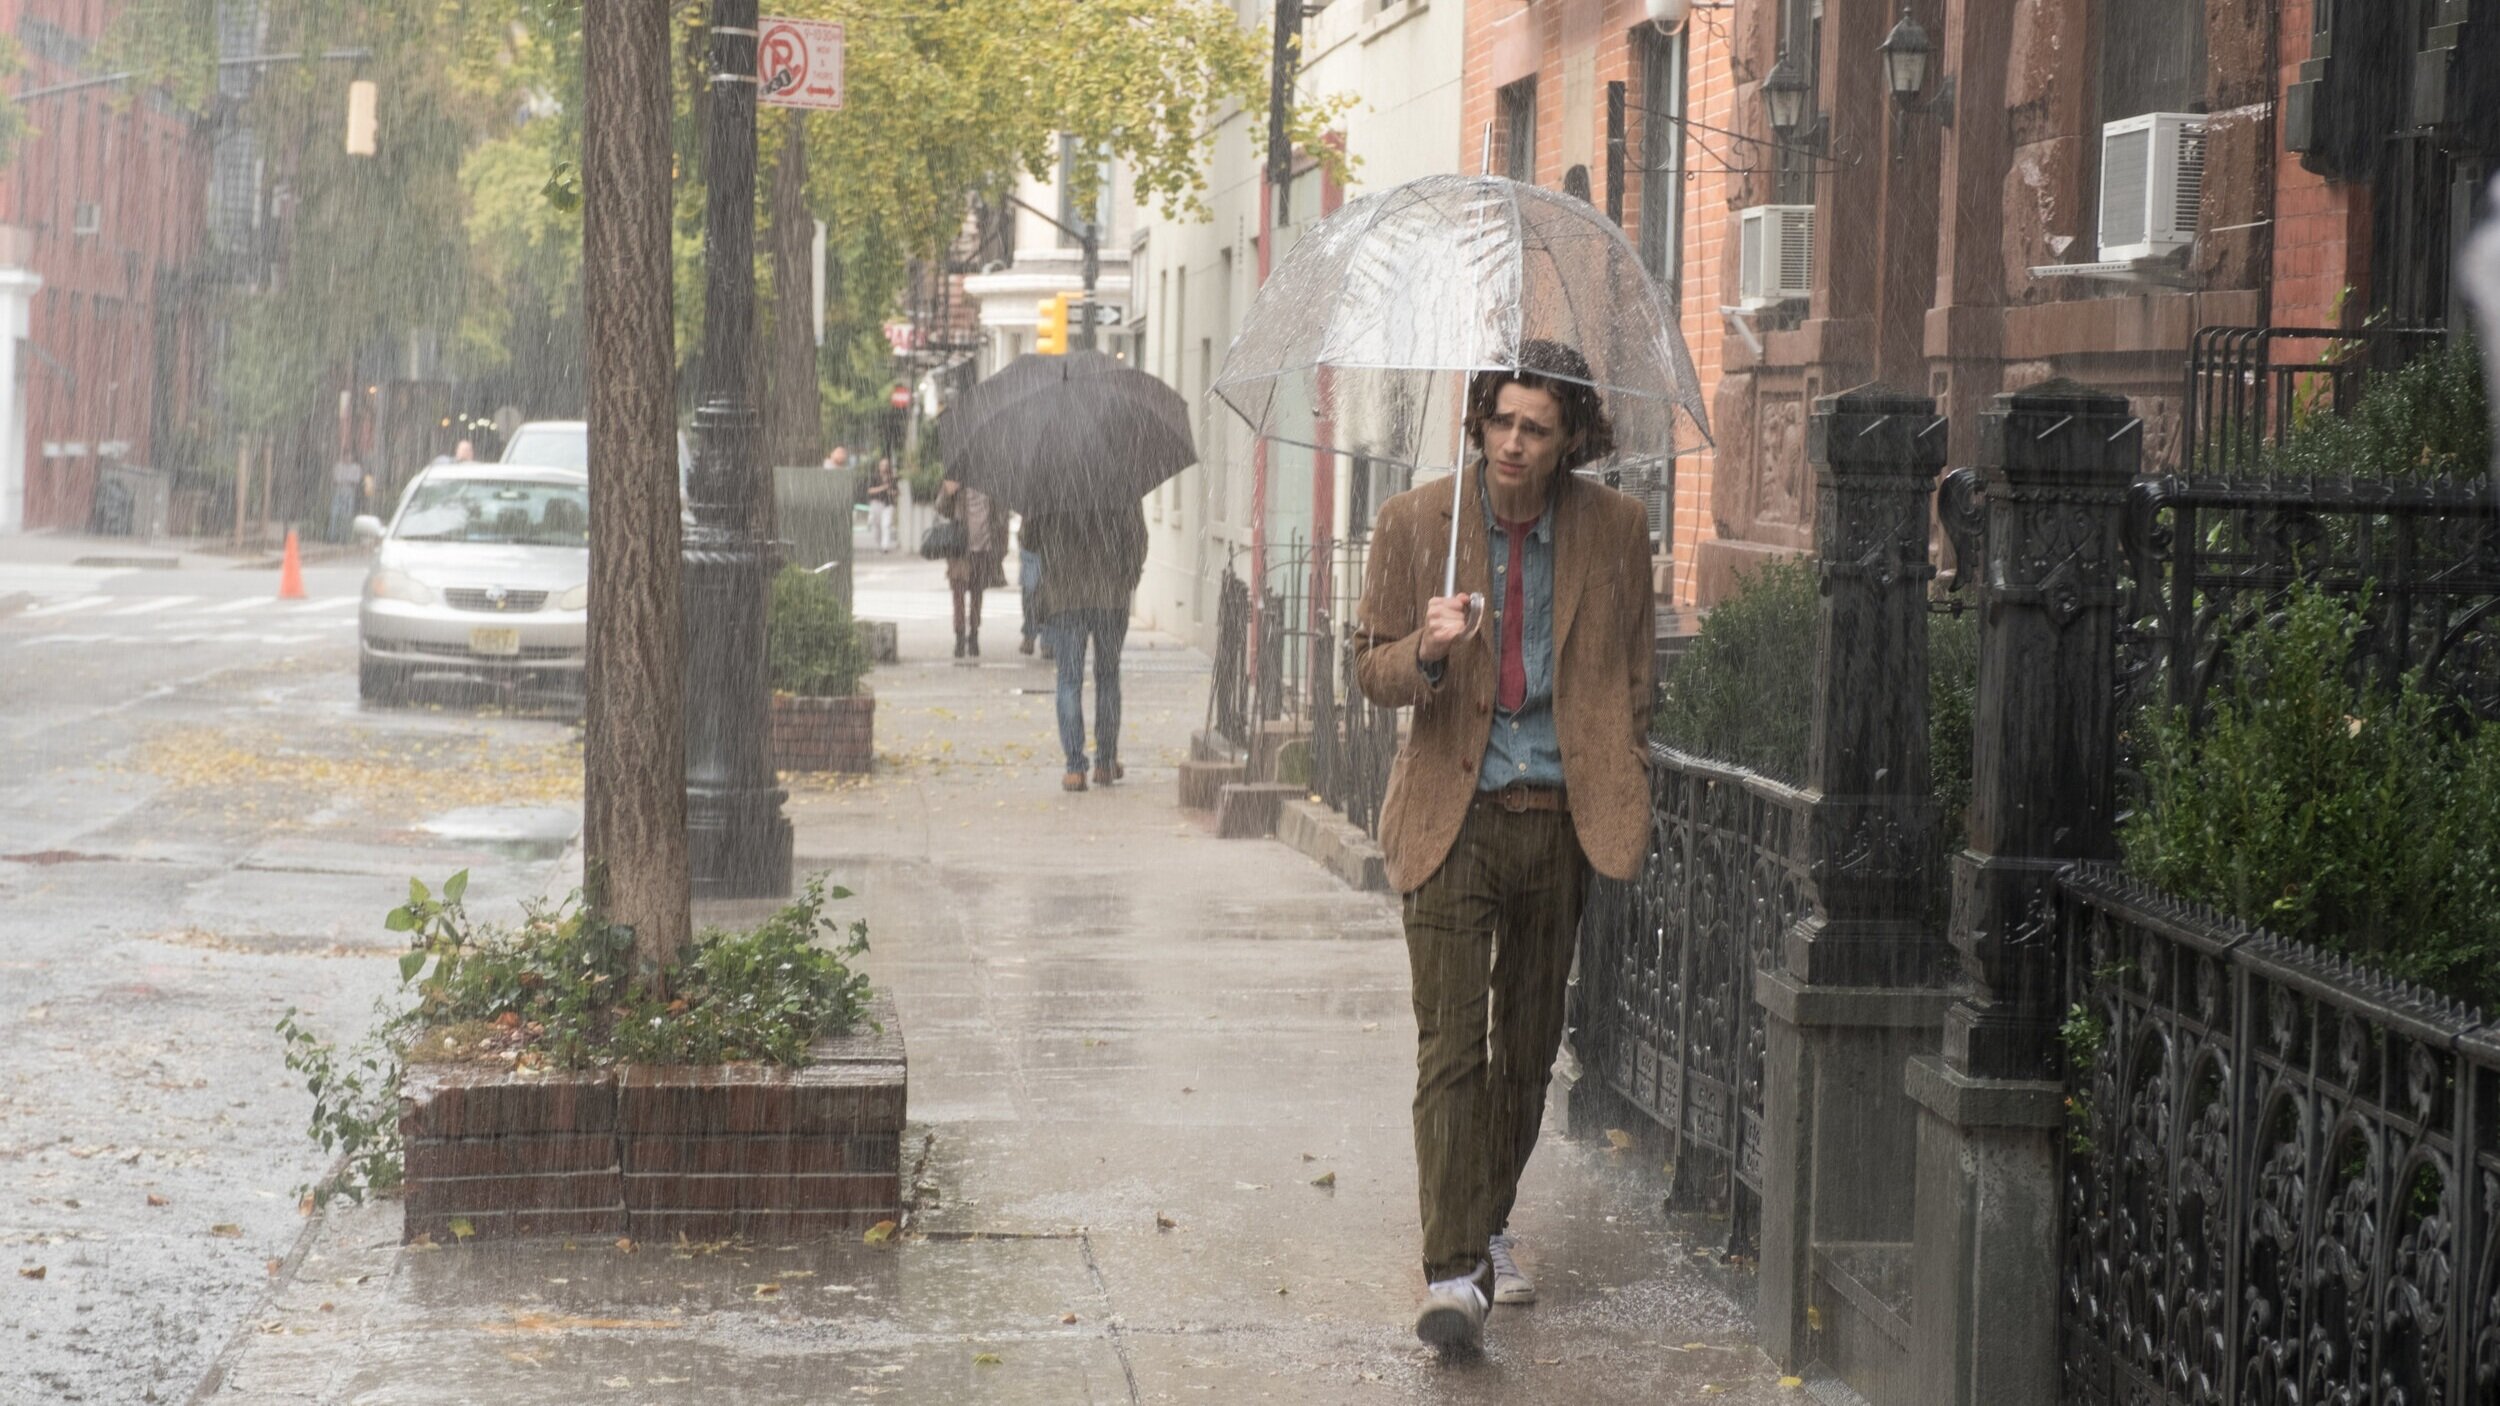 A Rainy Day in New York (2019) - IMDb